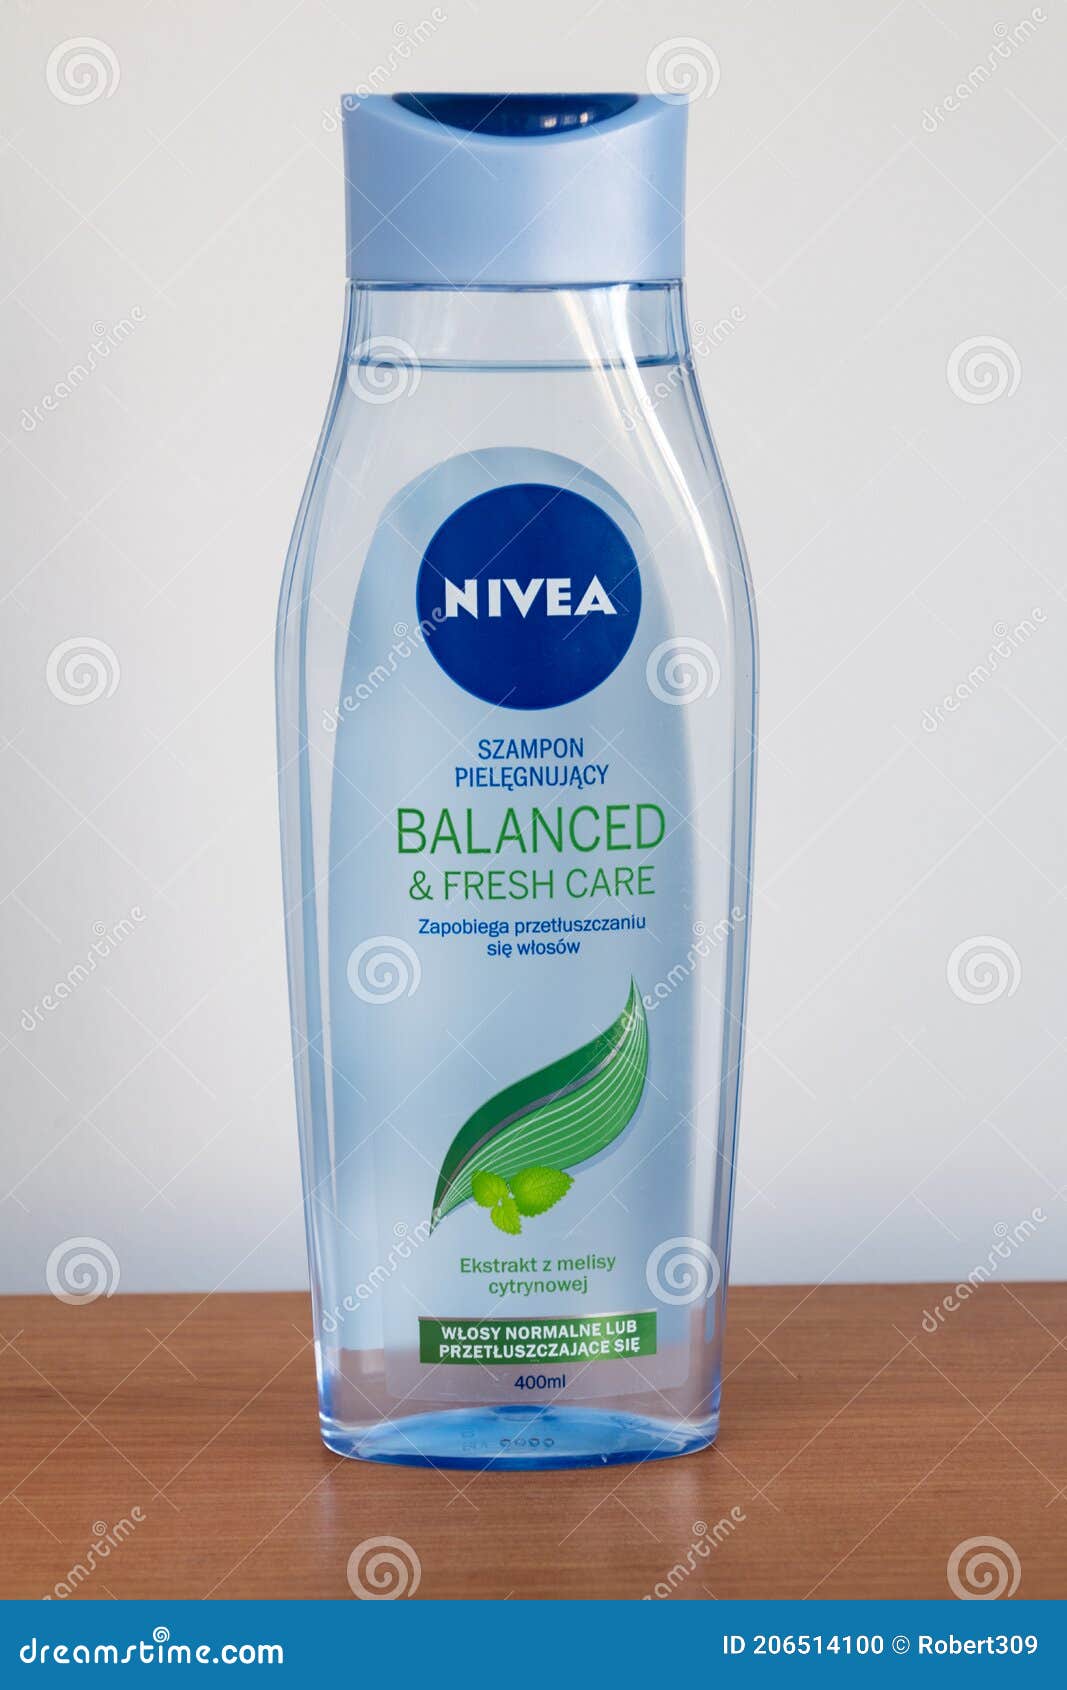 nivea balanced & fresh care szampon